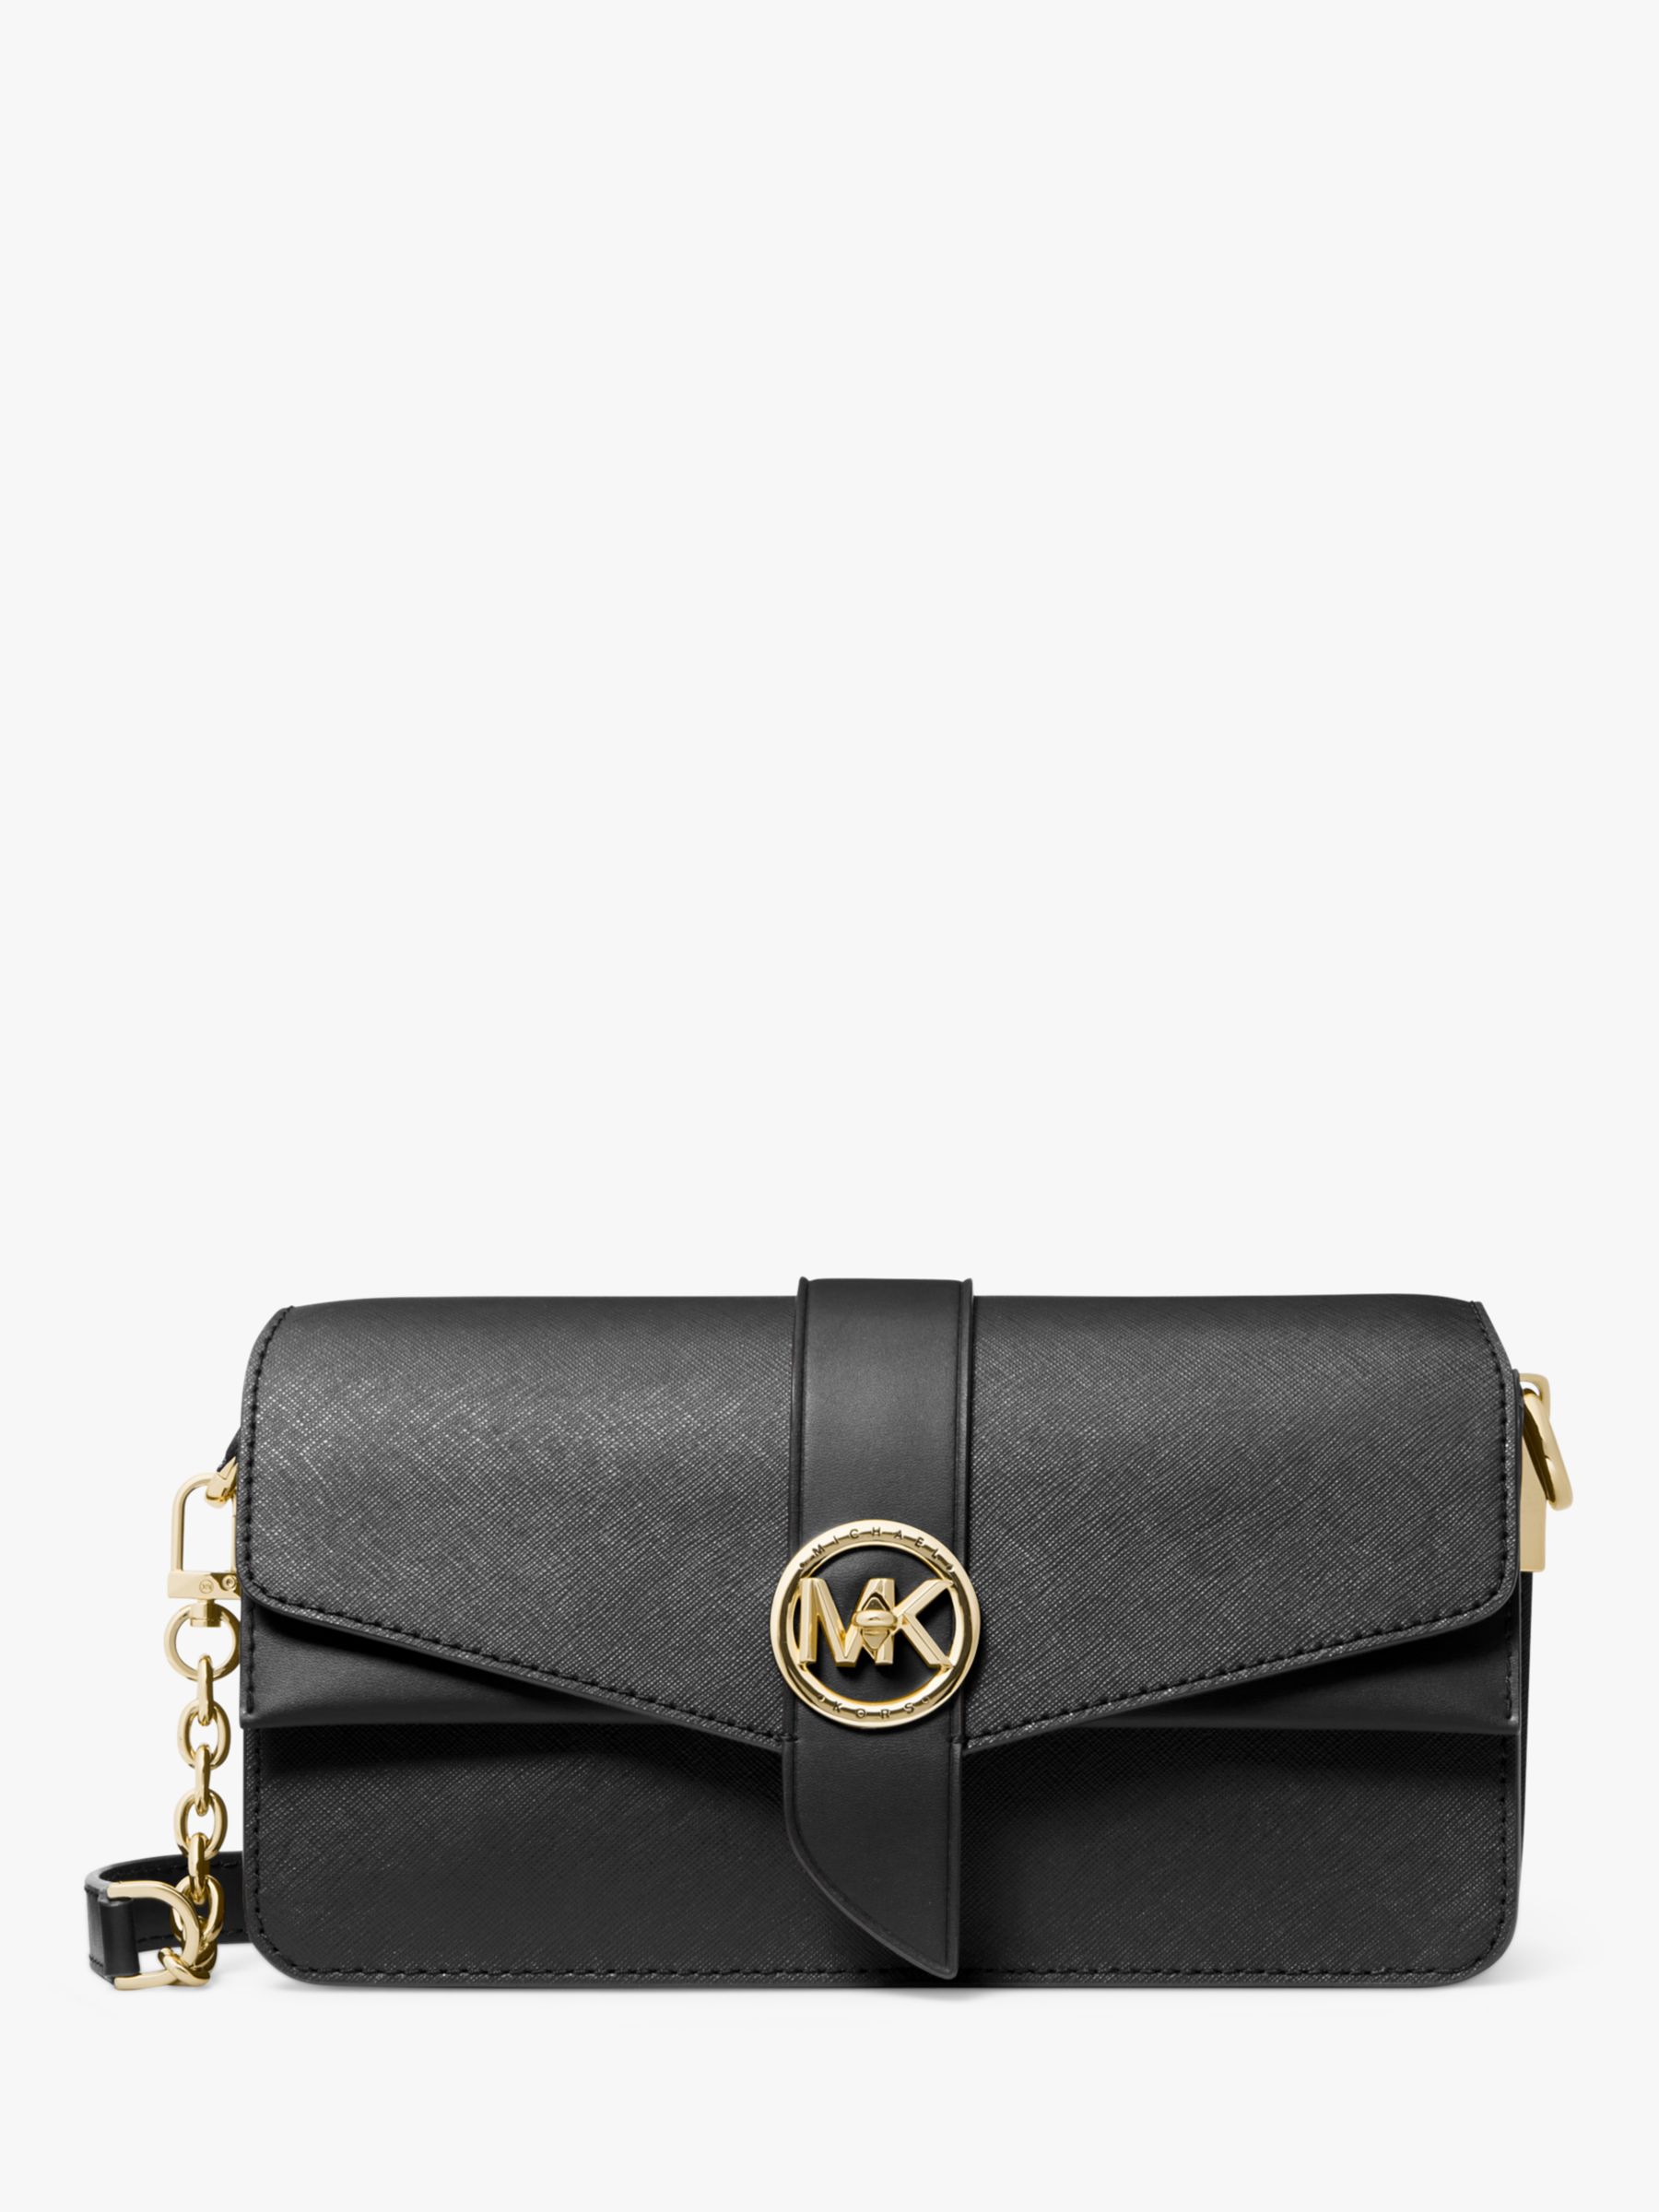 MICHAEL Michael Kors Greenwich Leather Shoulder Bag